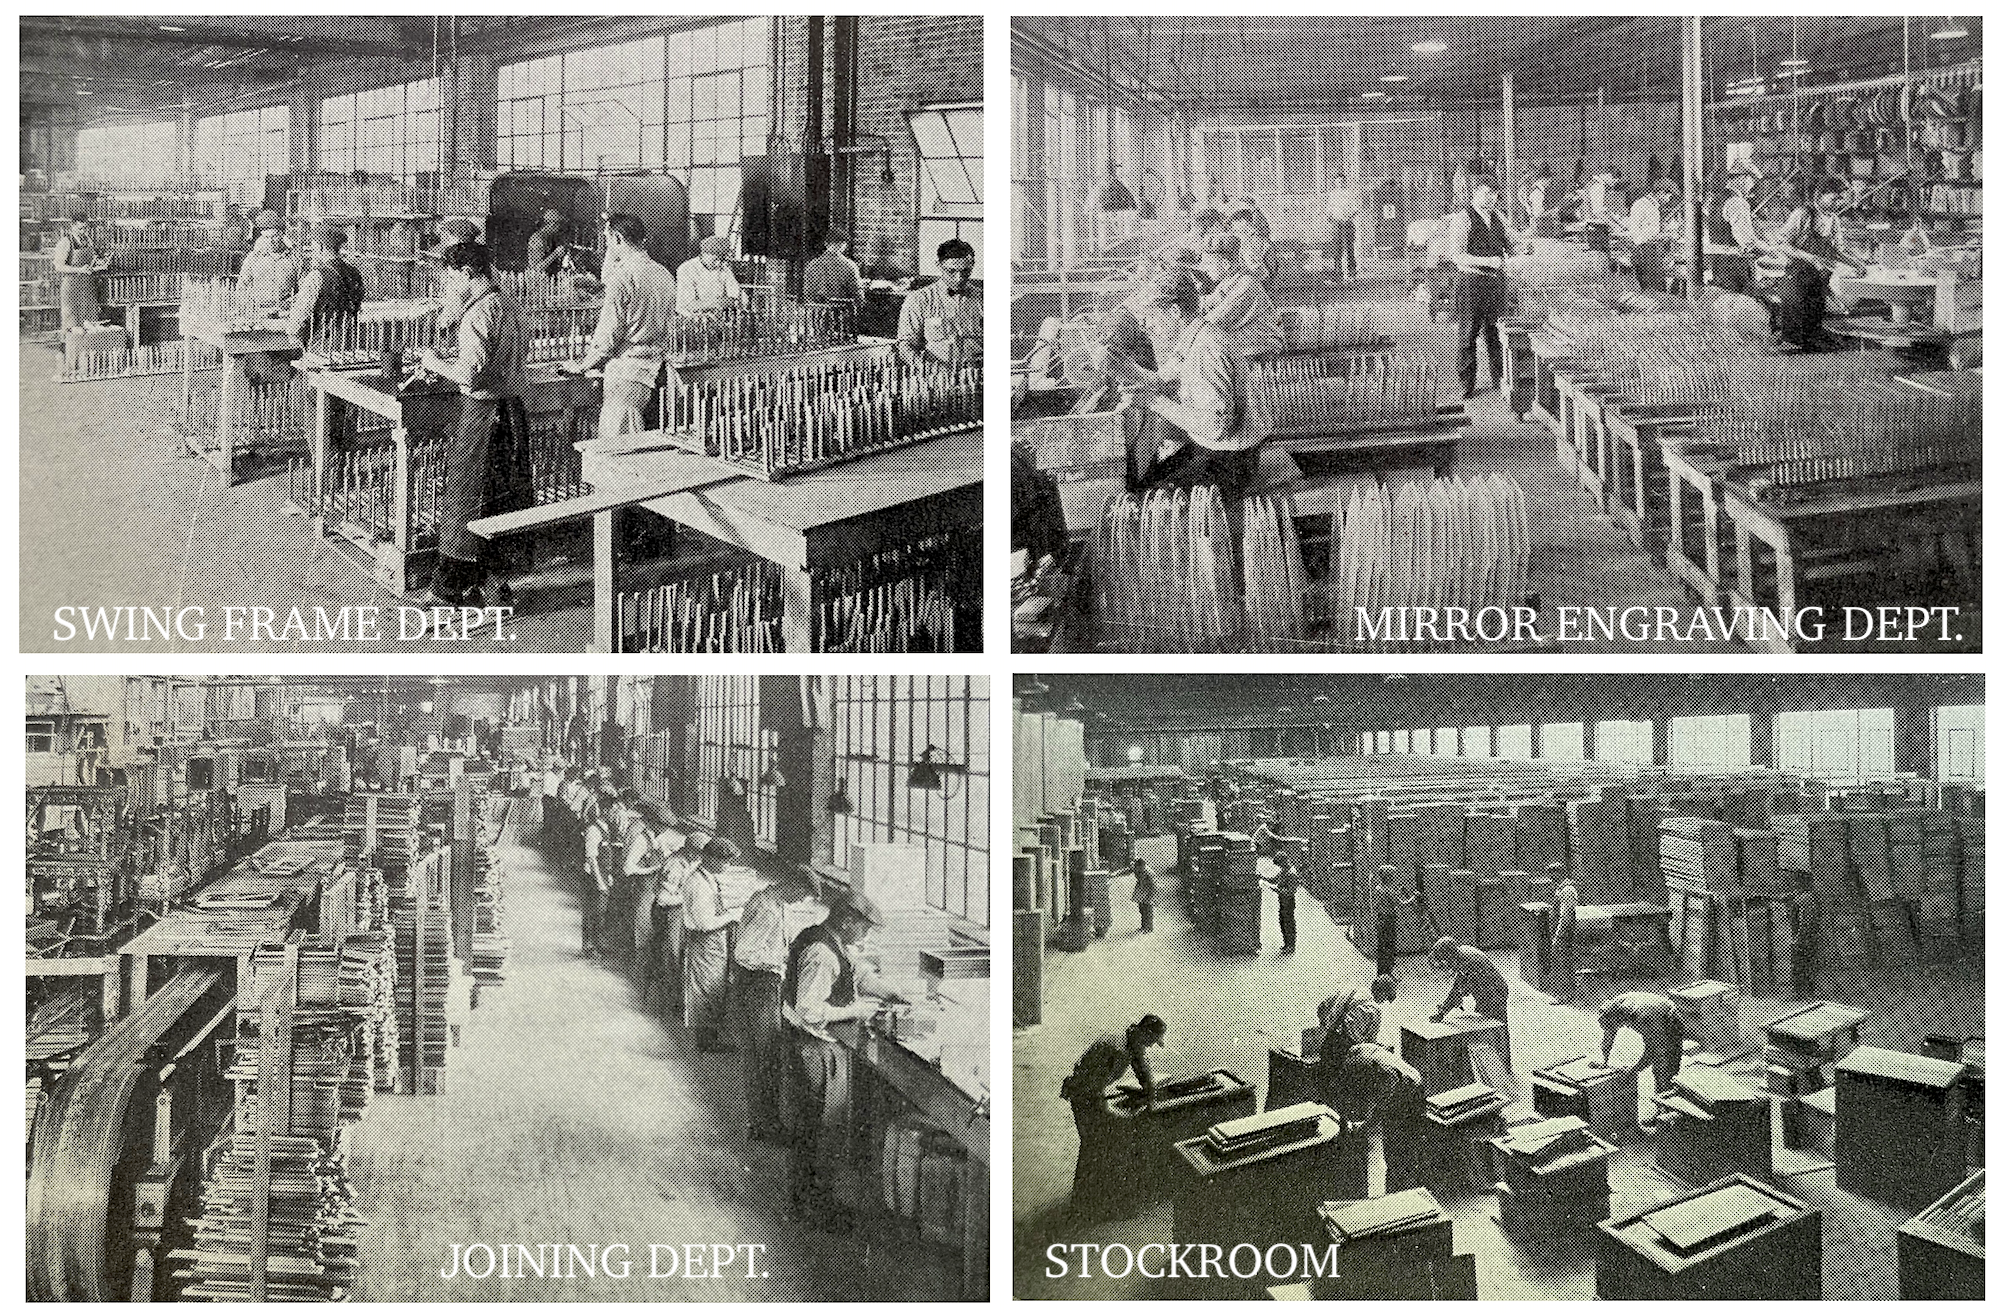 Borin factory workers